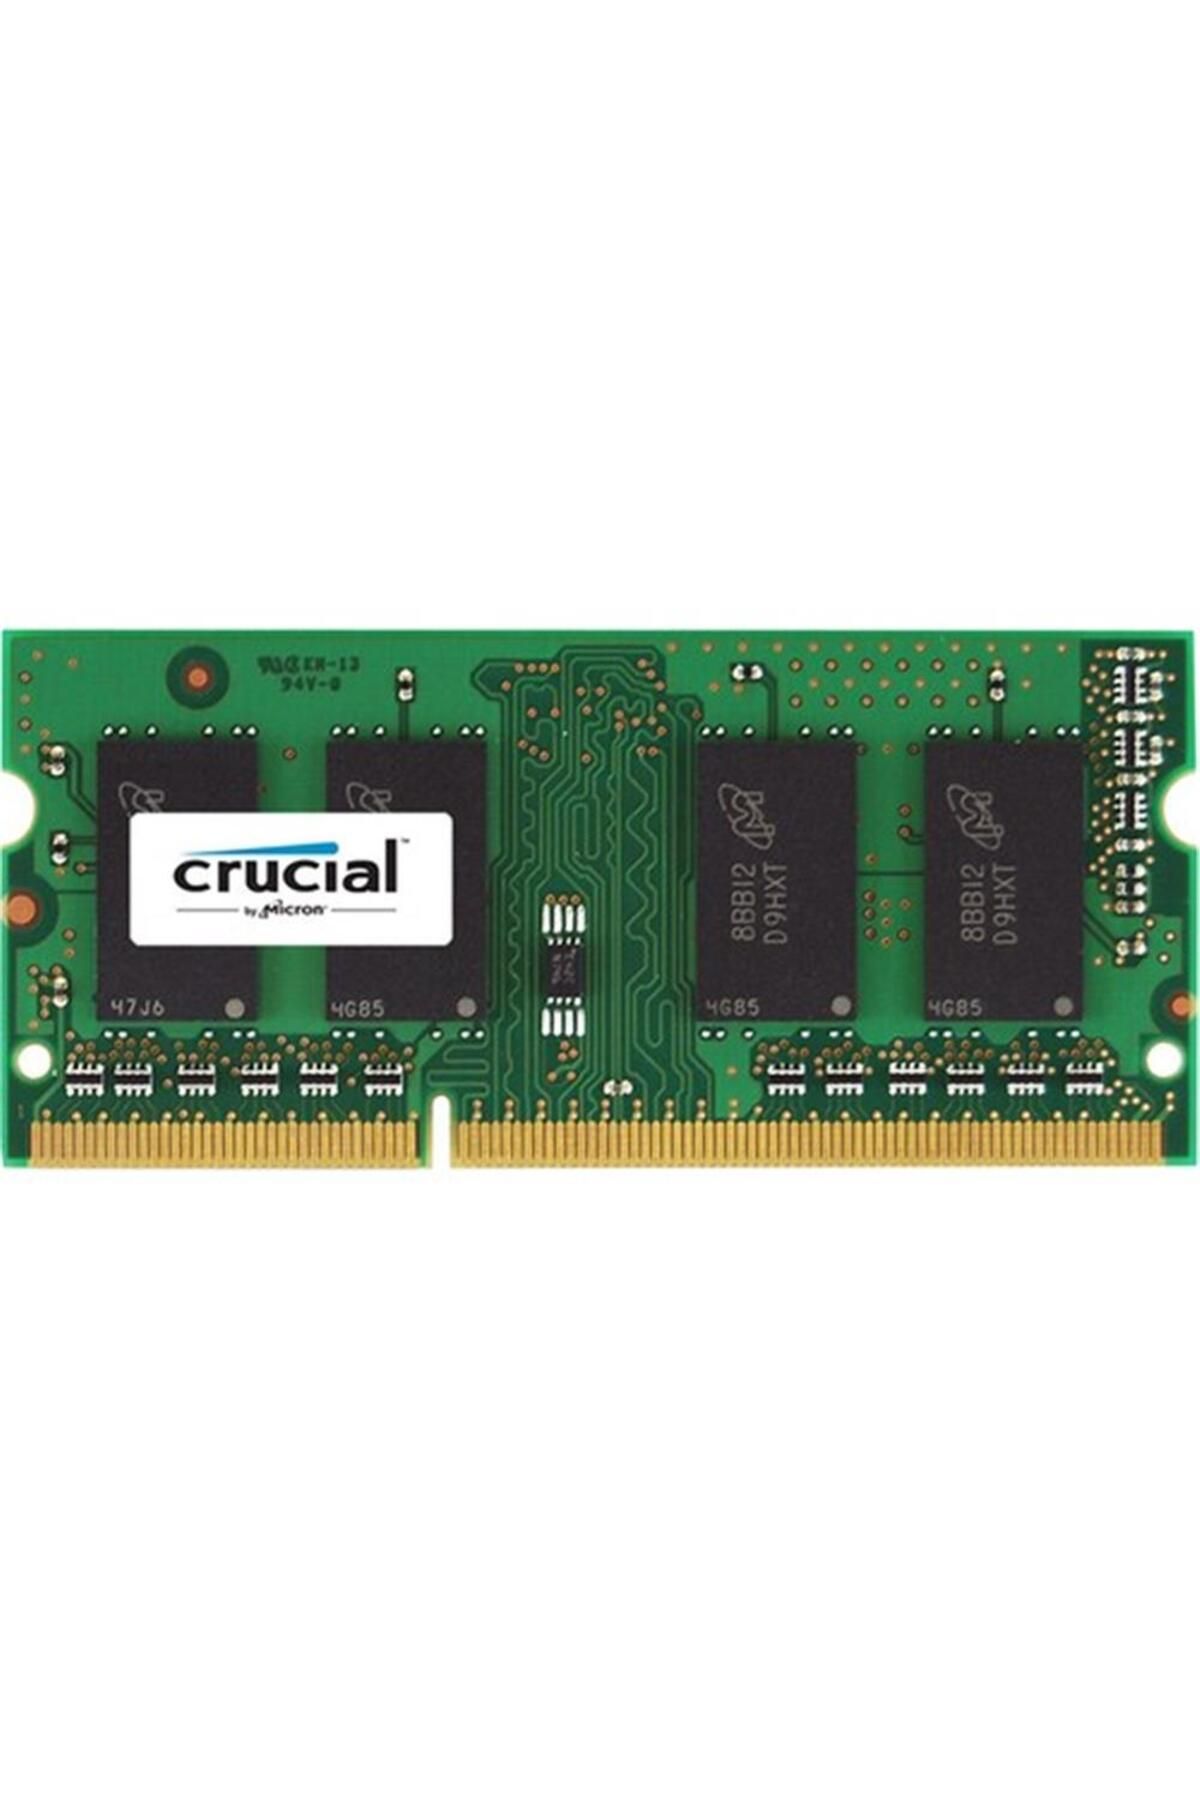 CRUCIALS Crucial 8GB 1600MHz CT102464BF160B DDR3 Notebook Ram